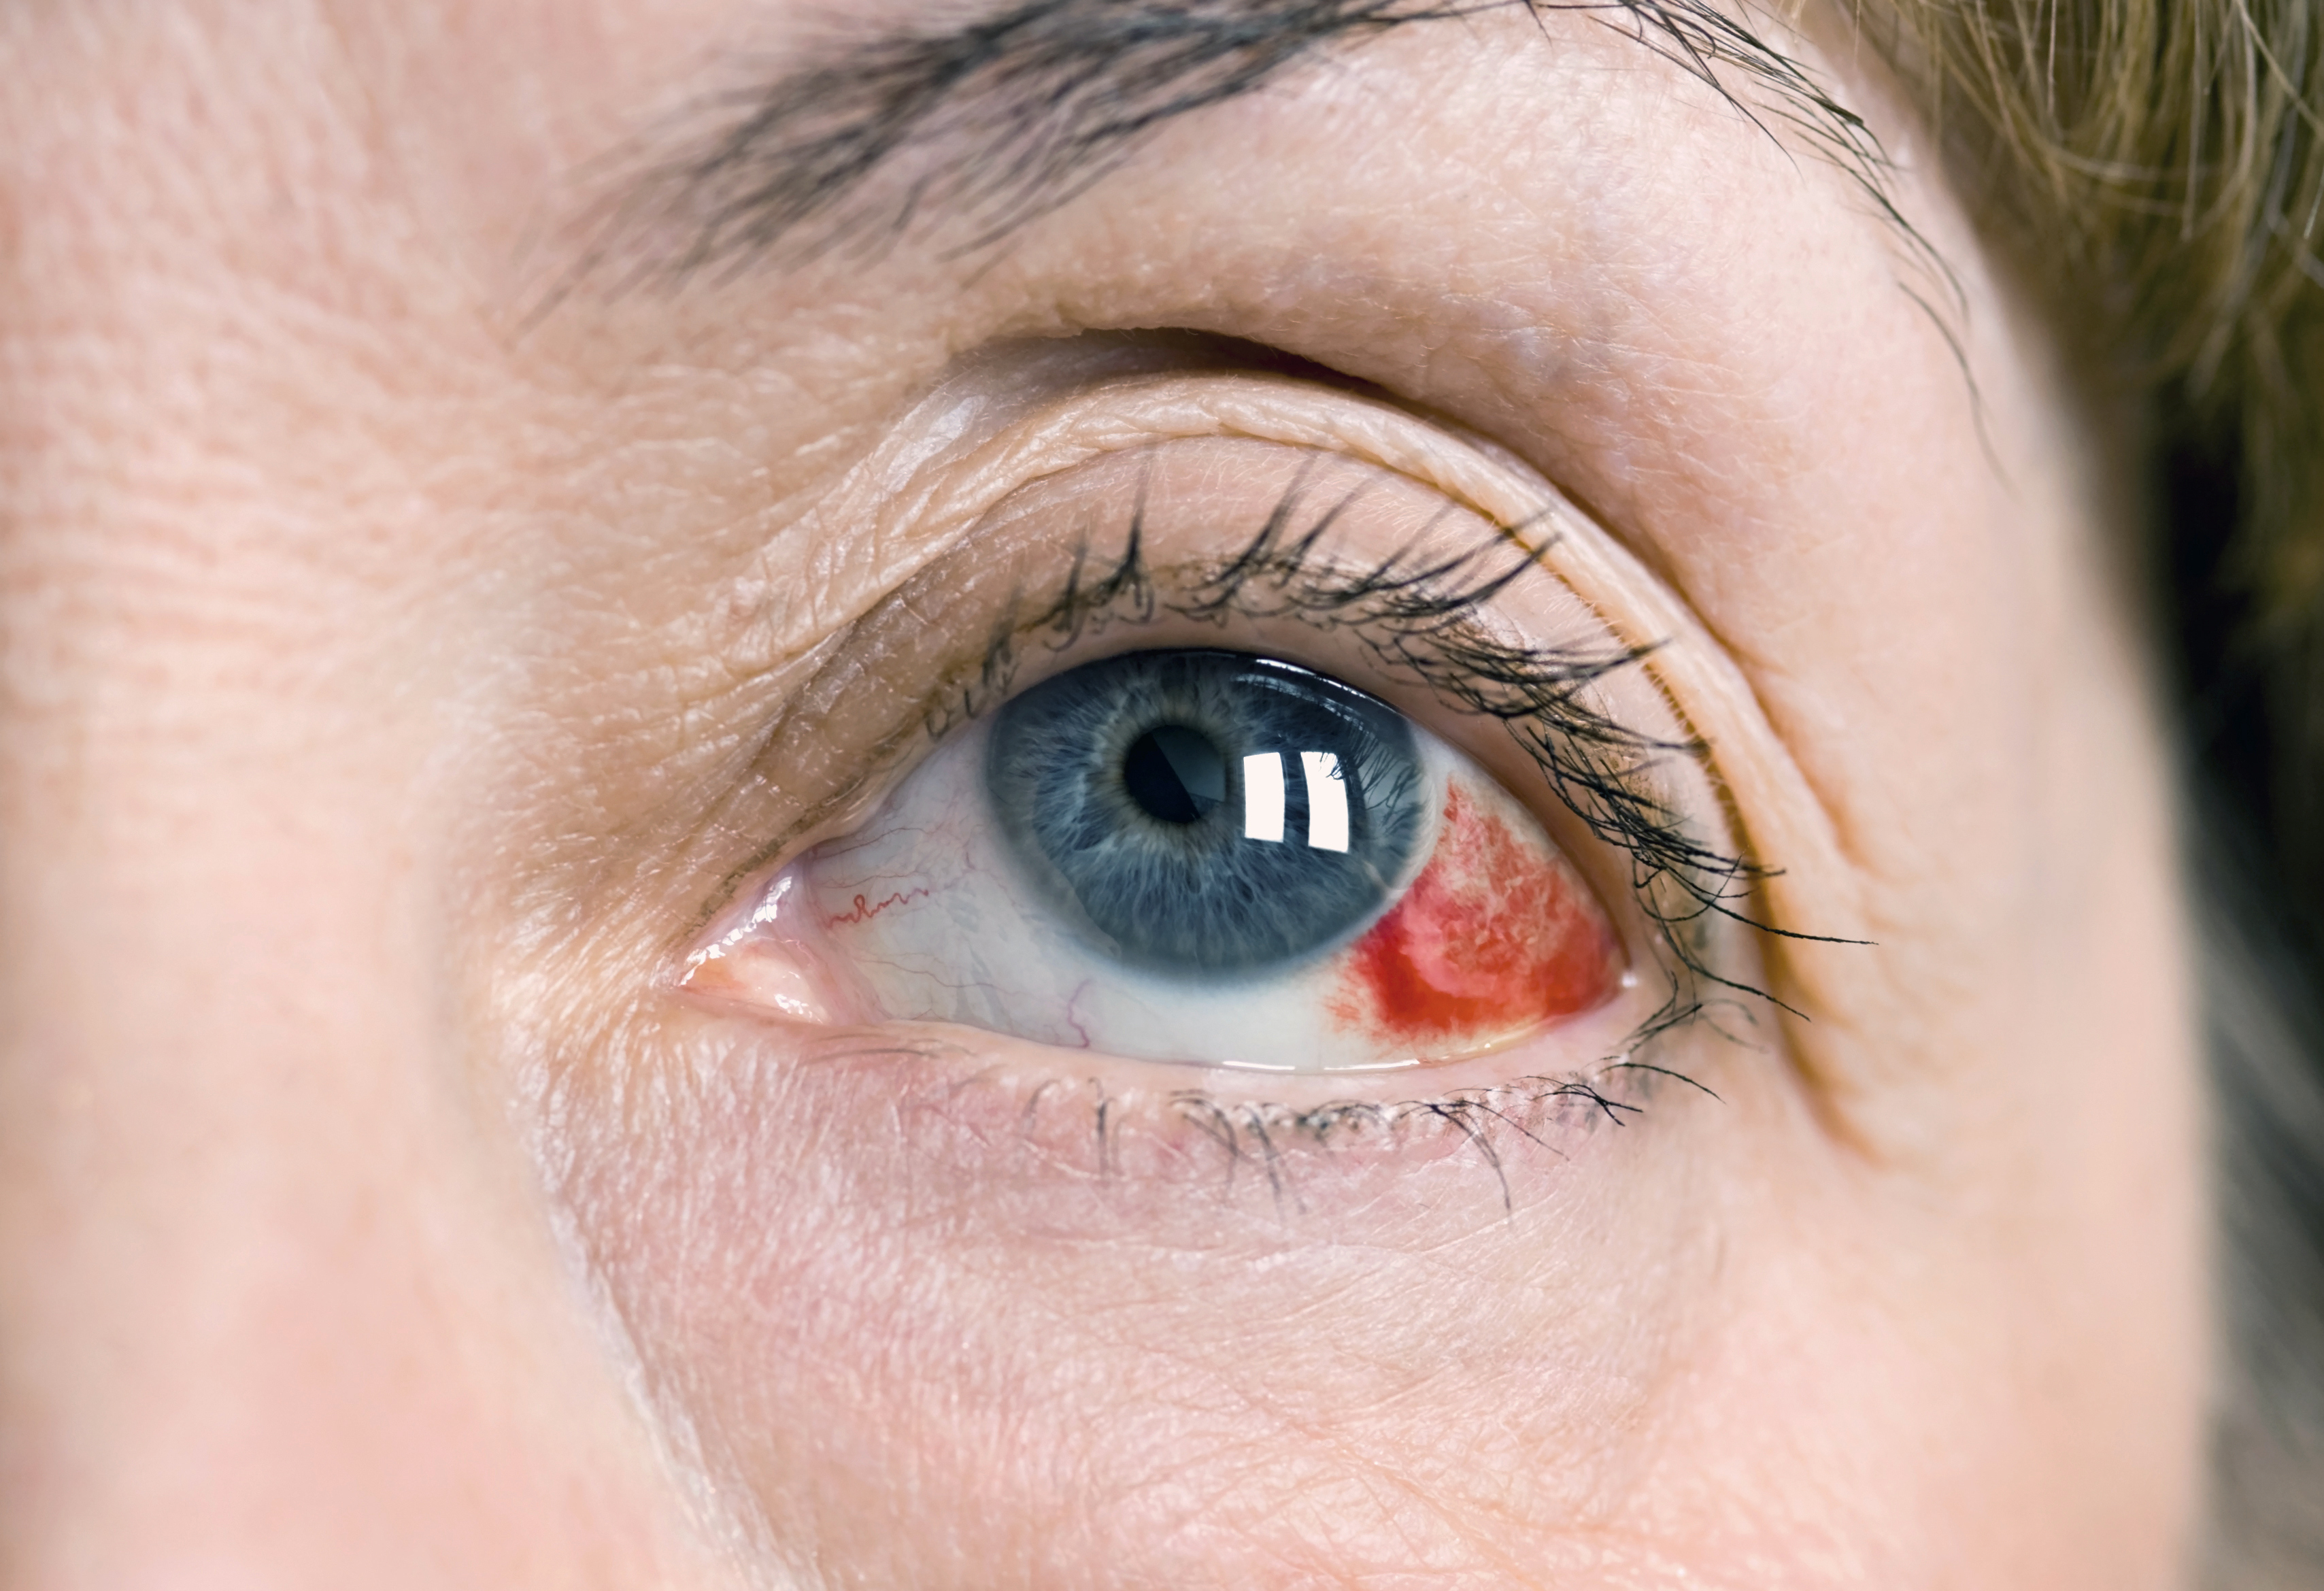 ER or Not: Broken Blood Vessel in Eye